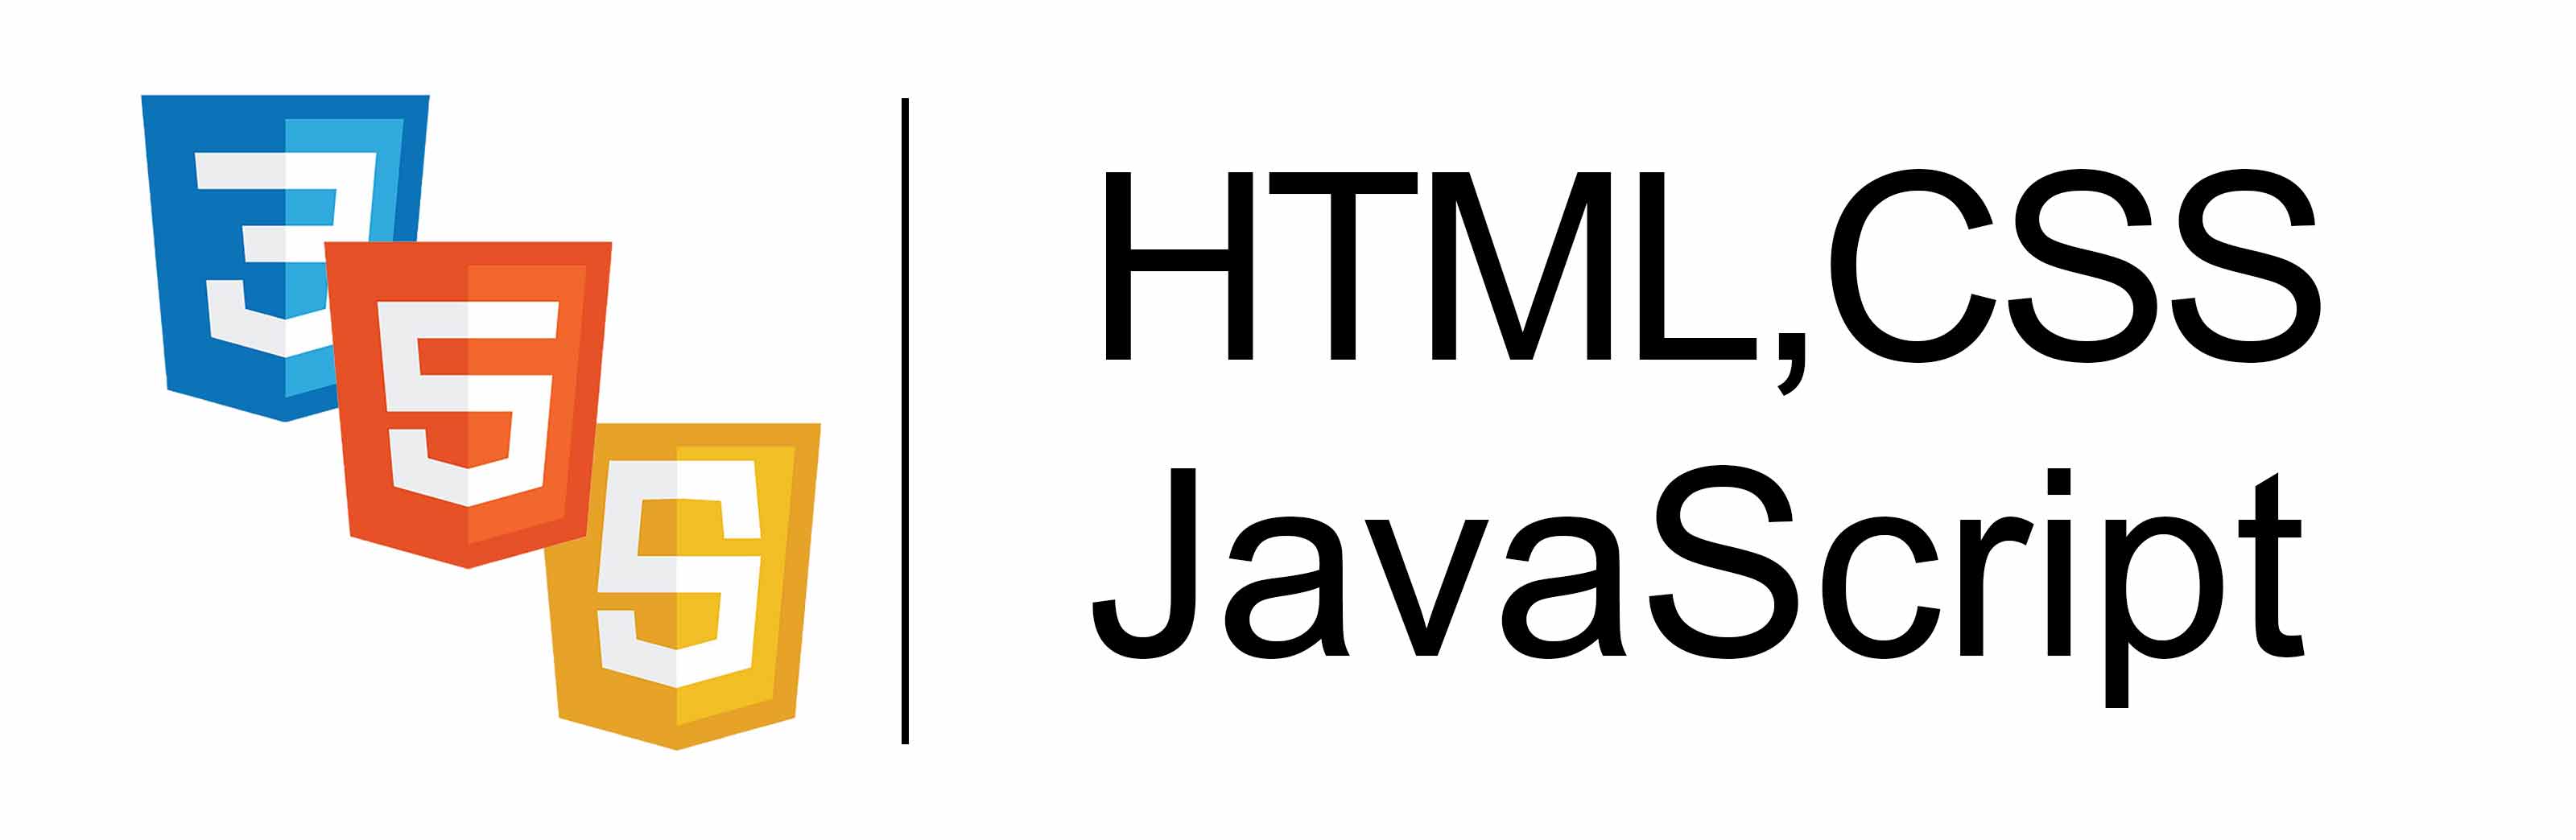 html css javascript mehregan